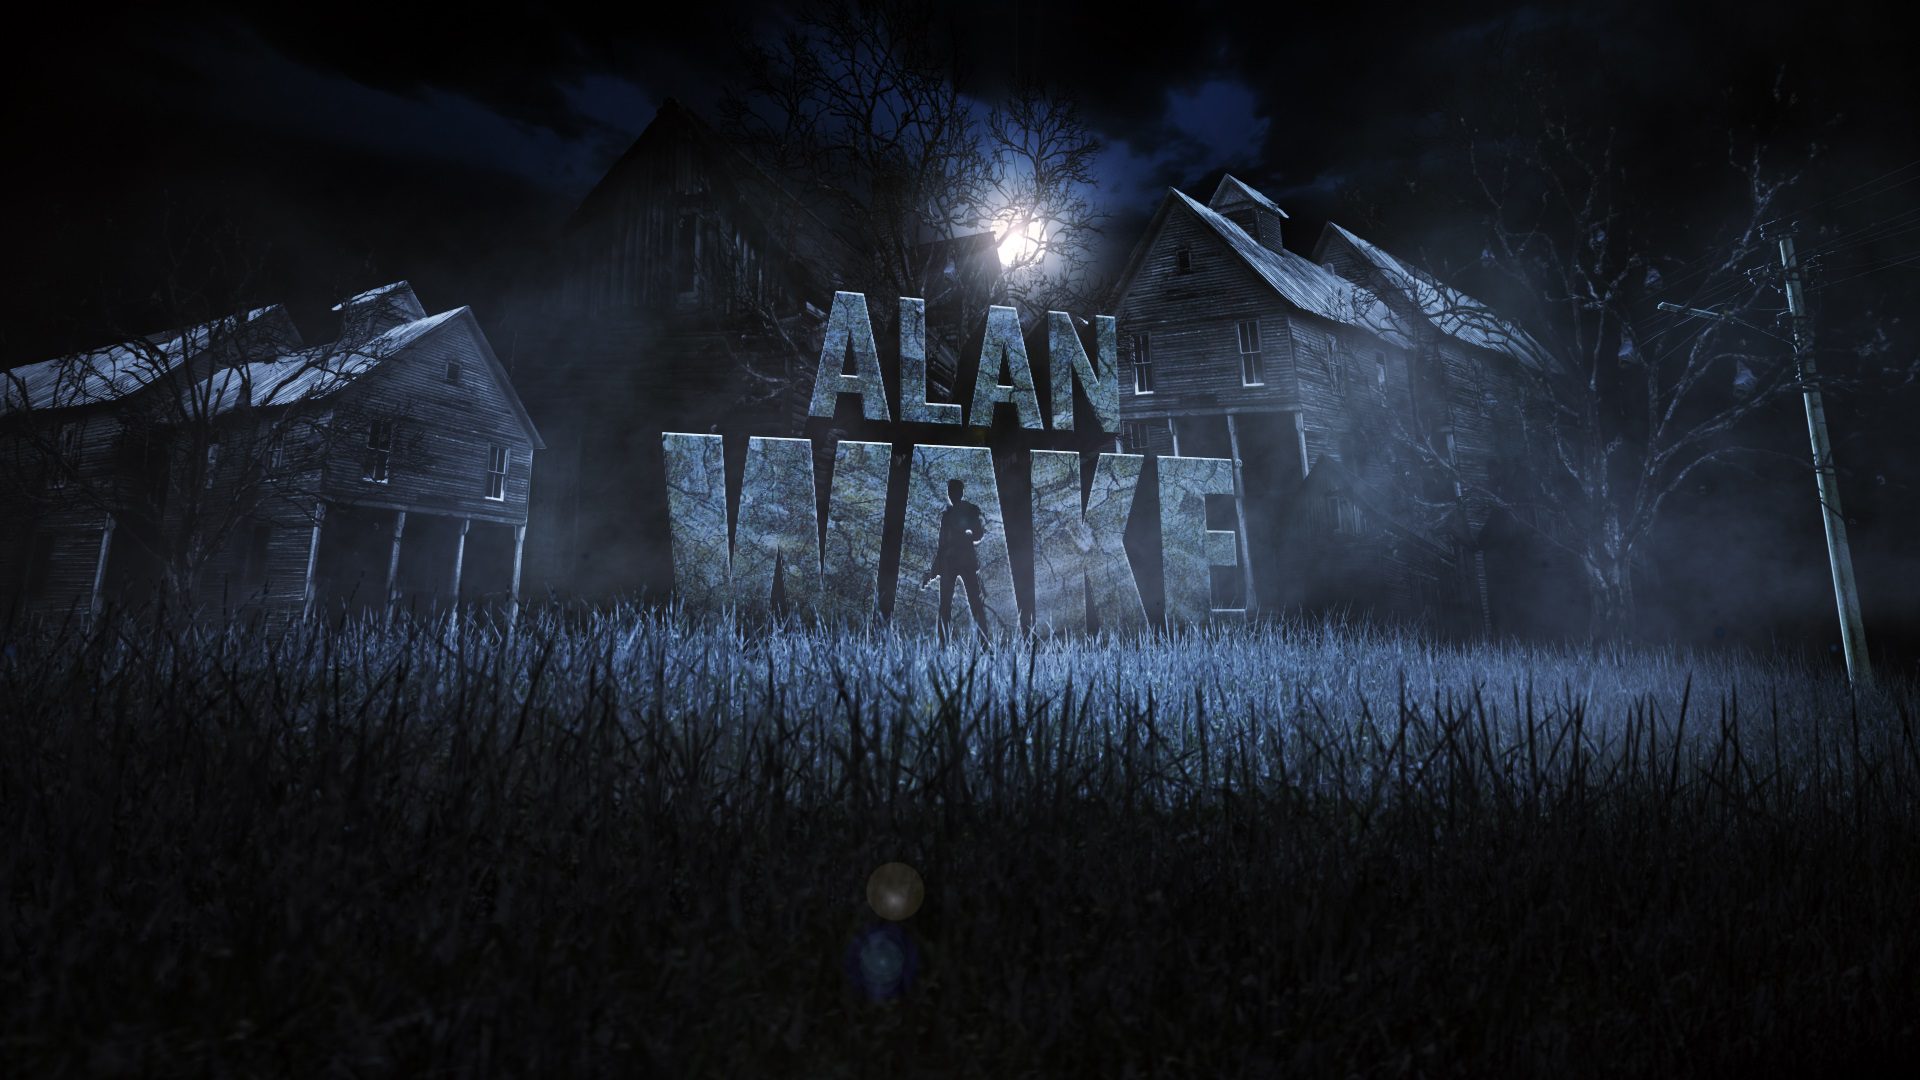 alan wake remastered steam